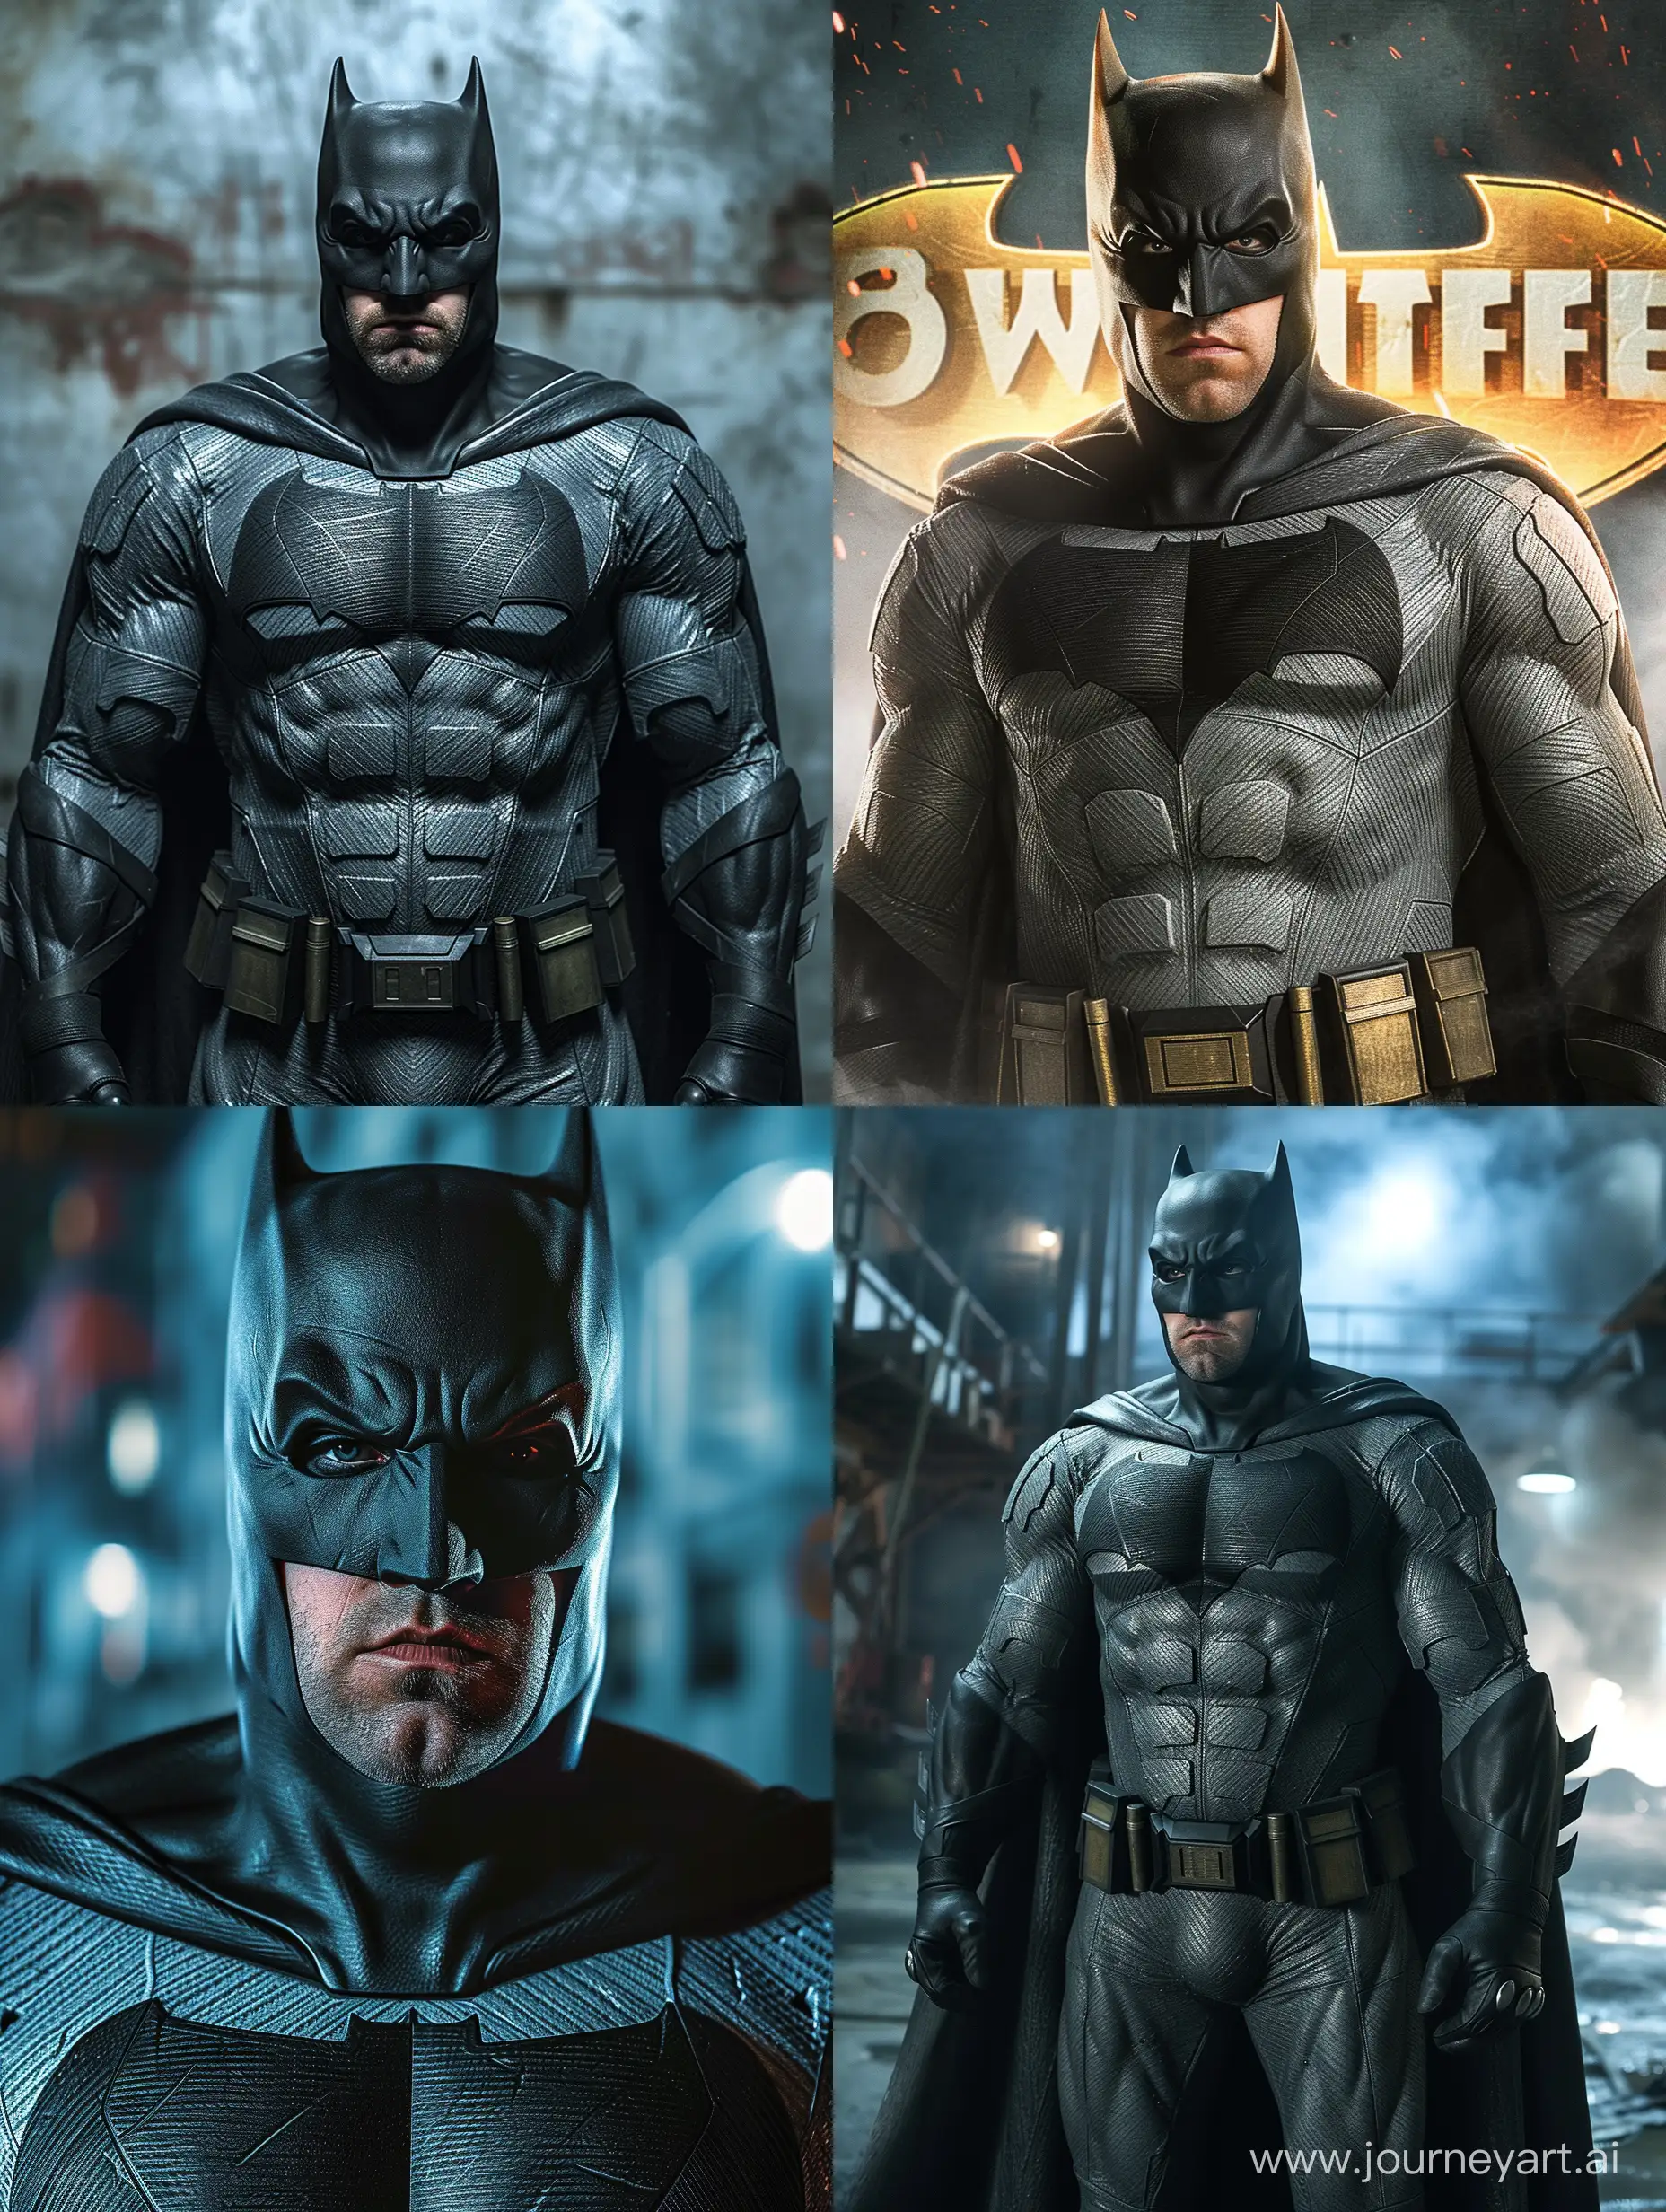 Batman-Affleck-Showcasing-Vigilante-Justice-in-Whife-8K-Dynamic-Action-Shot